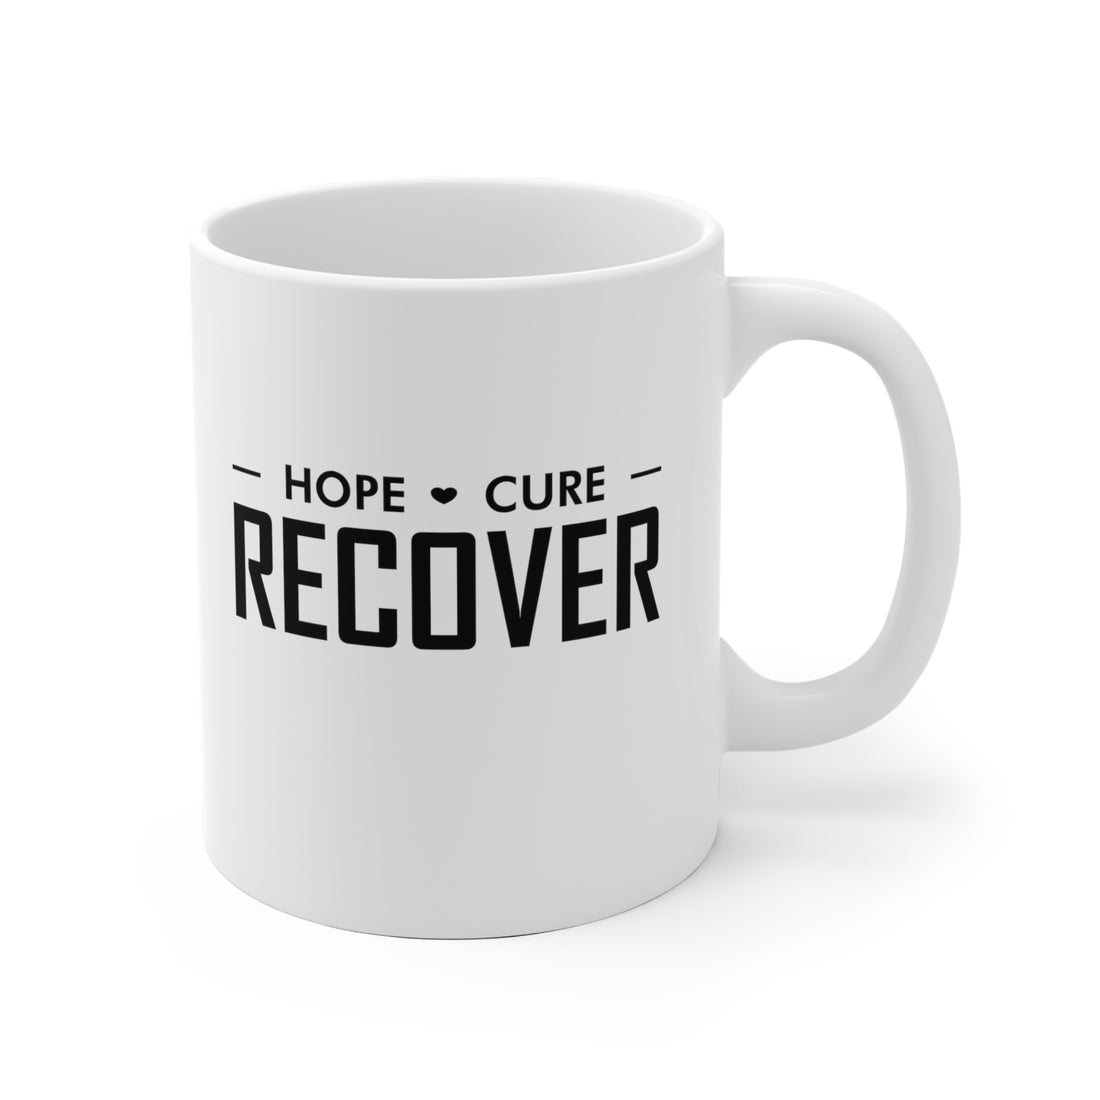 Hope Cure Recover - White Ceramic Mug 2 sizes Available